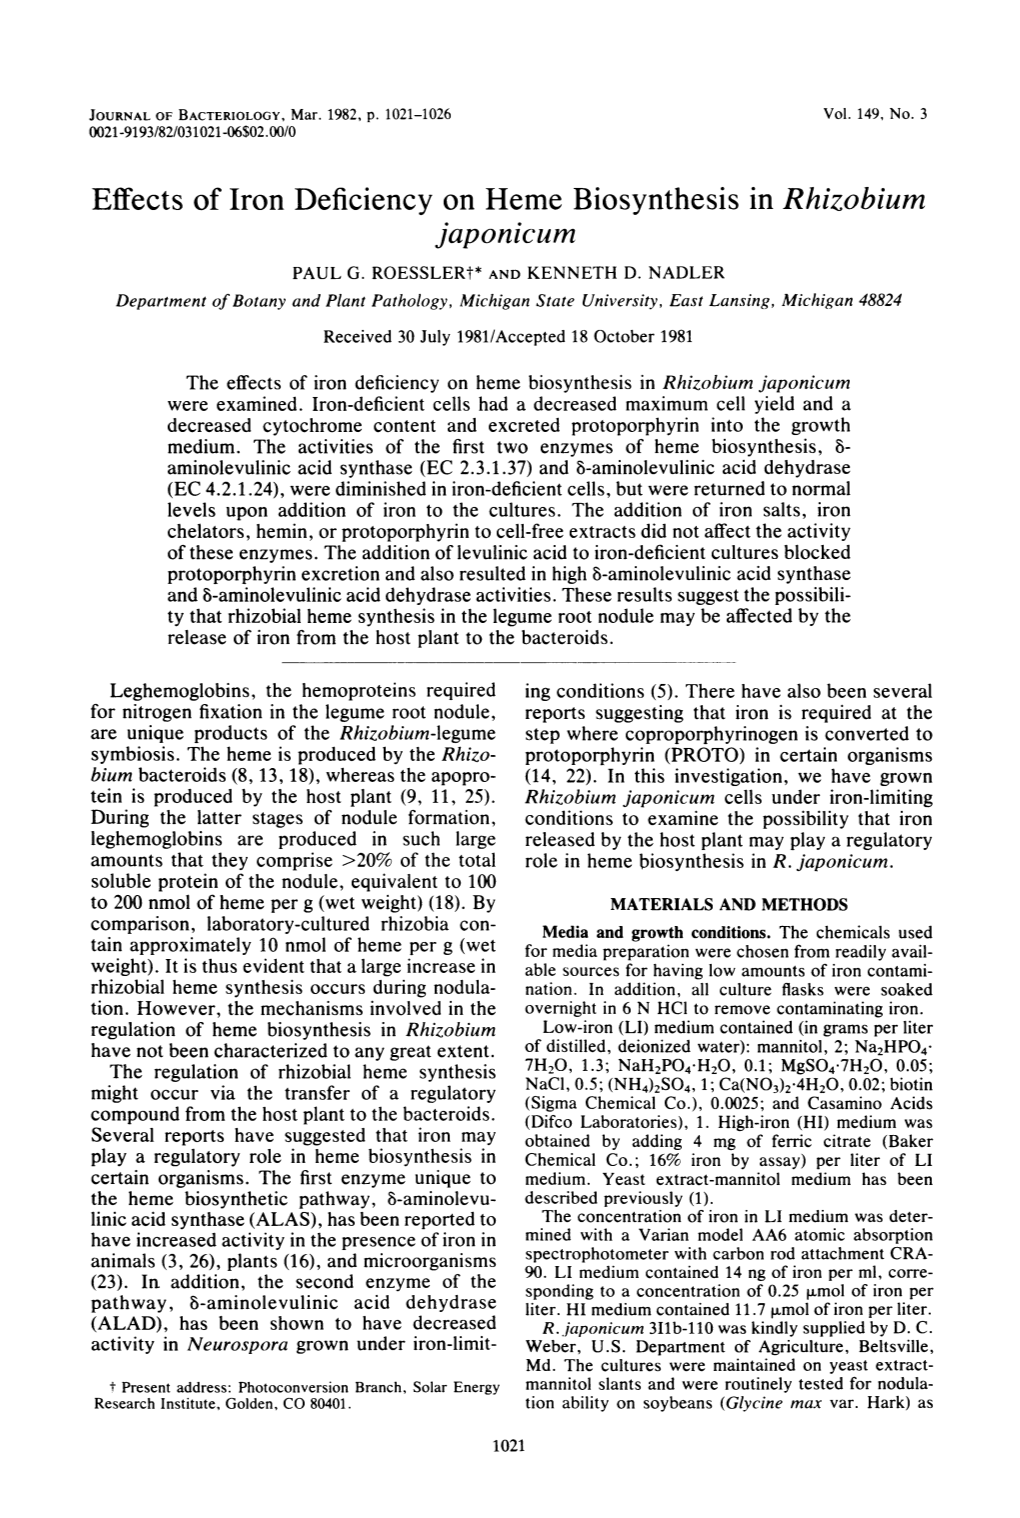 Effects of Iron Deficiency on Heme Biosynthesis in Rhizobium Japonicum PAUL G